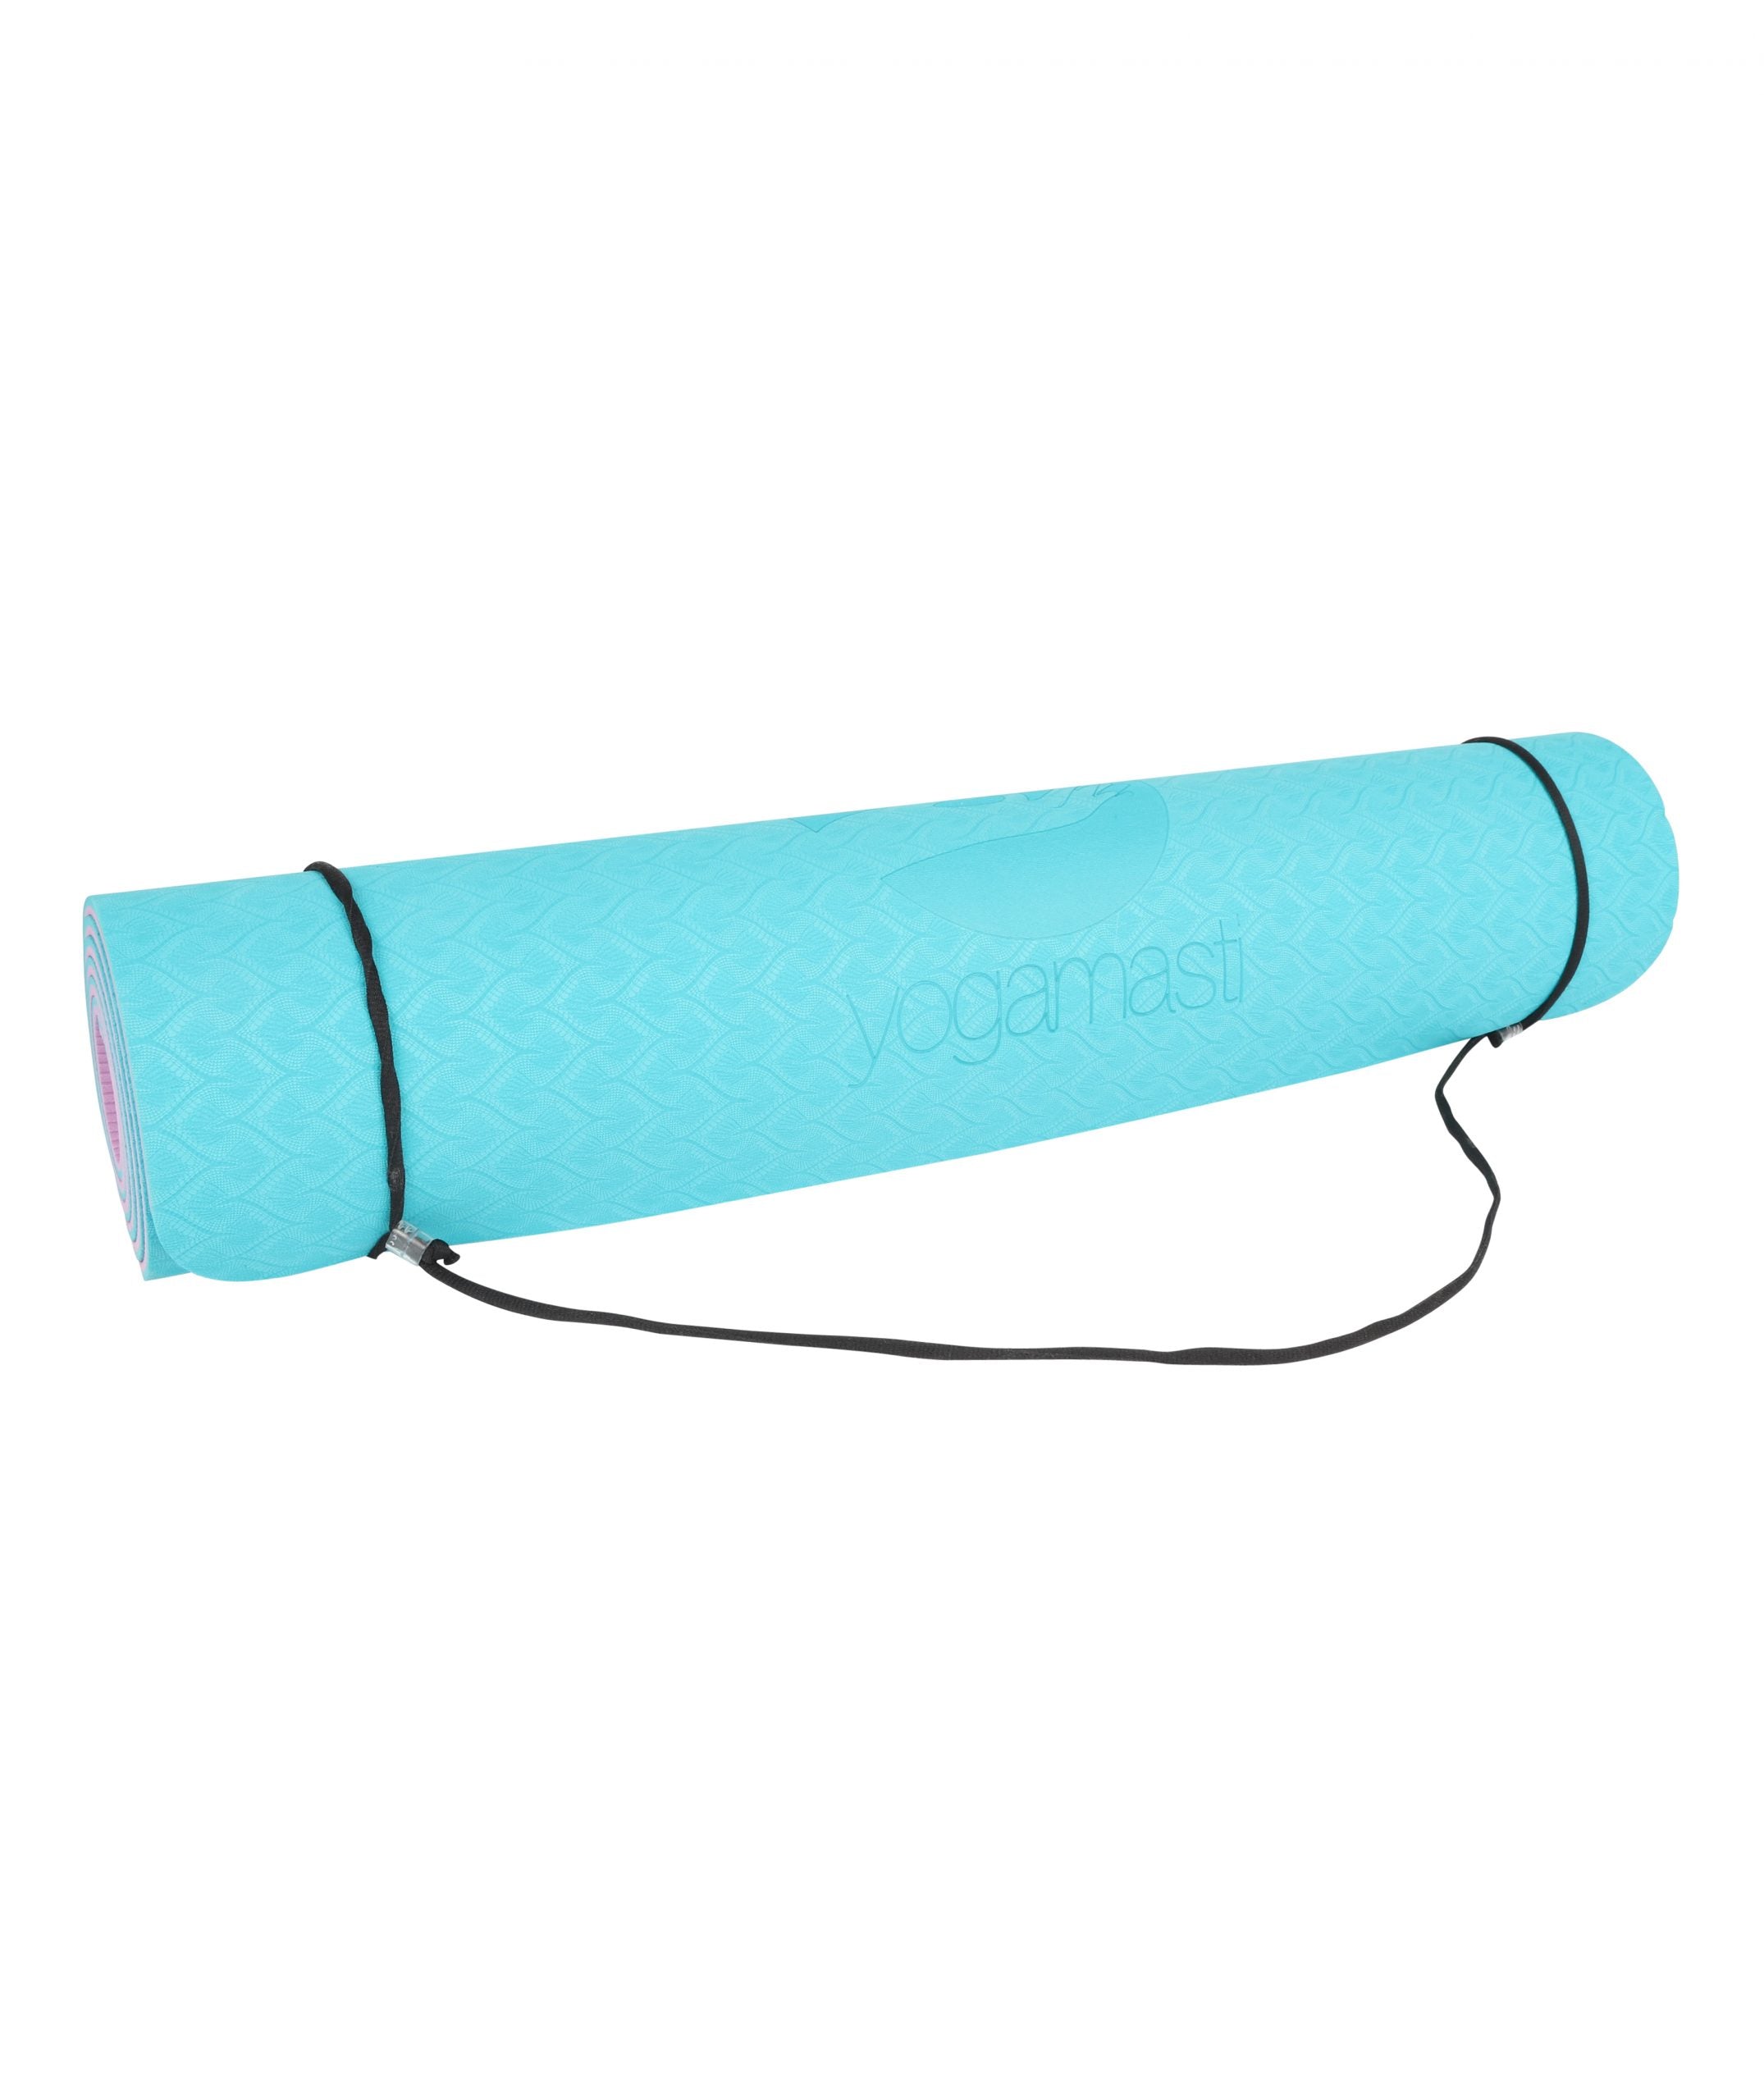 Practice Plus Sticky Extra Wide Yoga Mat - TPE, Aqua/Pink 6mm